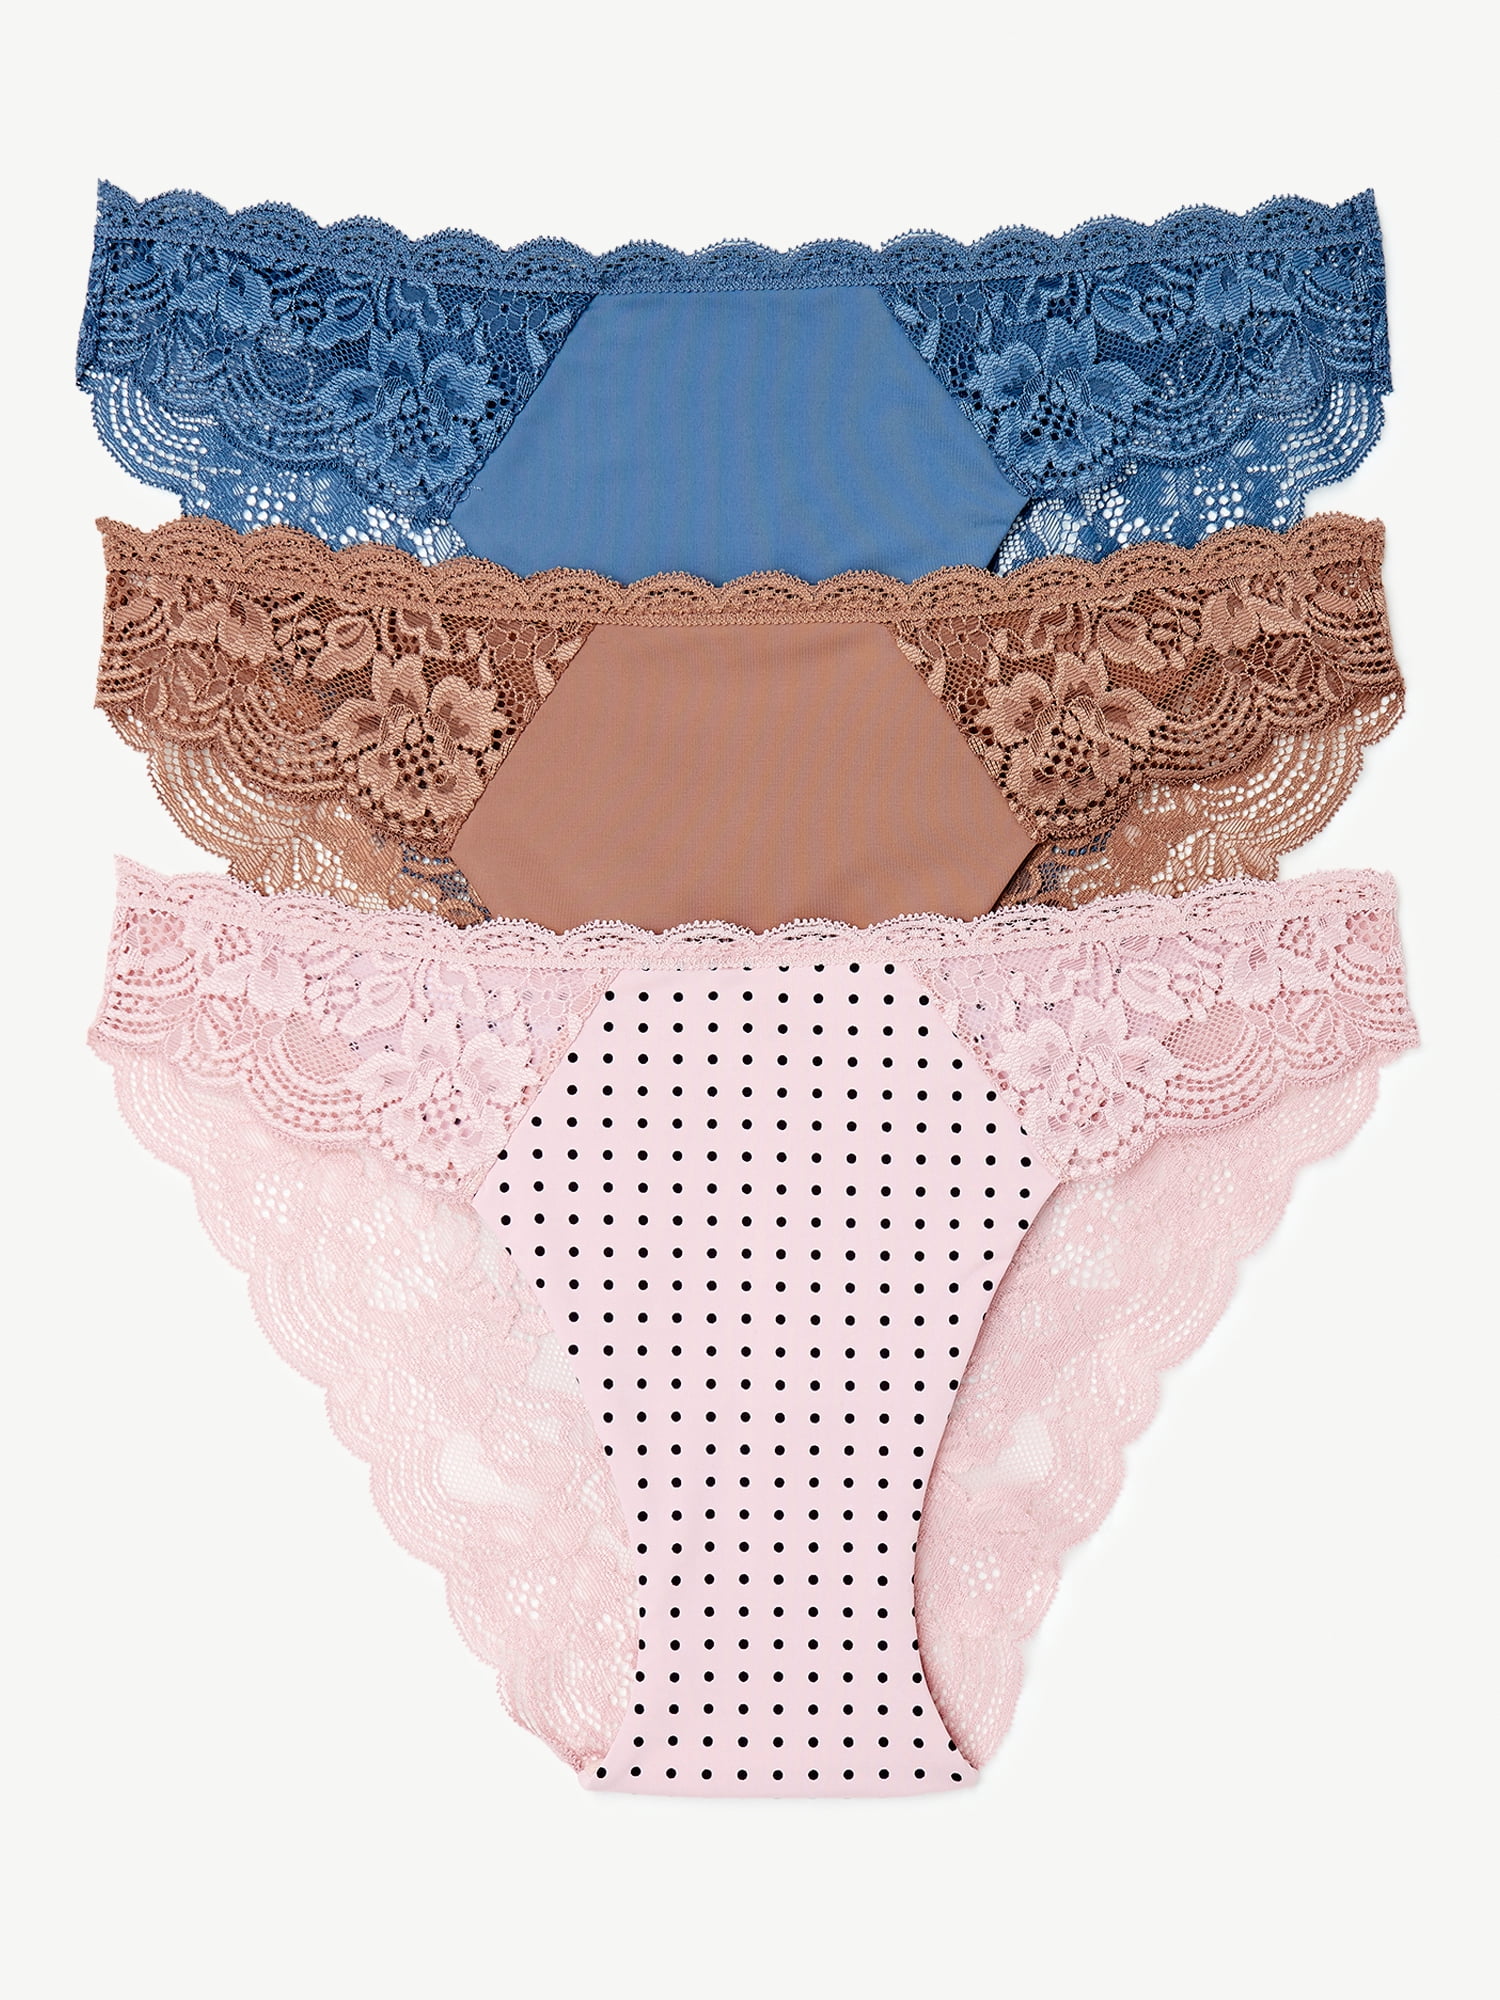 Joyspun Women S Cheeky Panties 3 Pack Sizes To 3xl